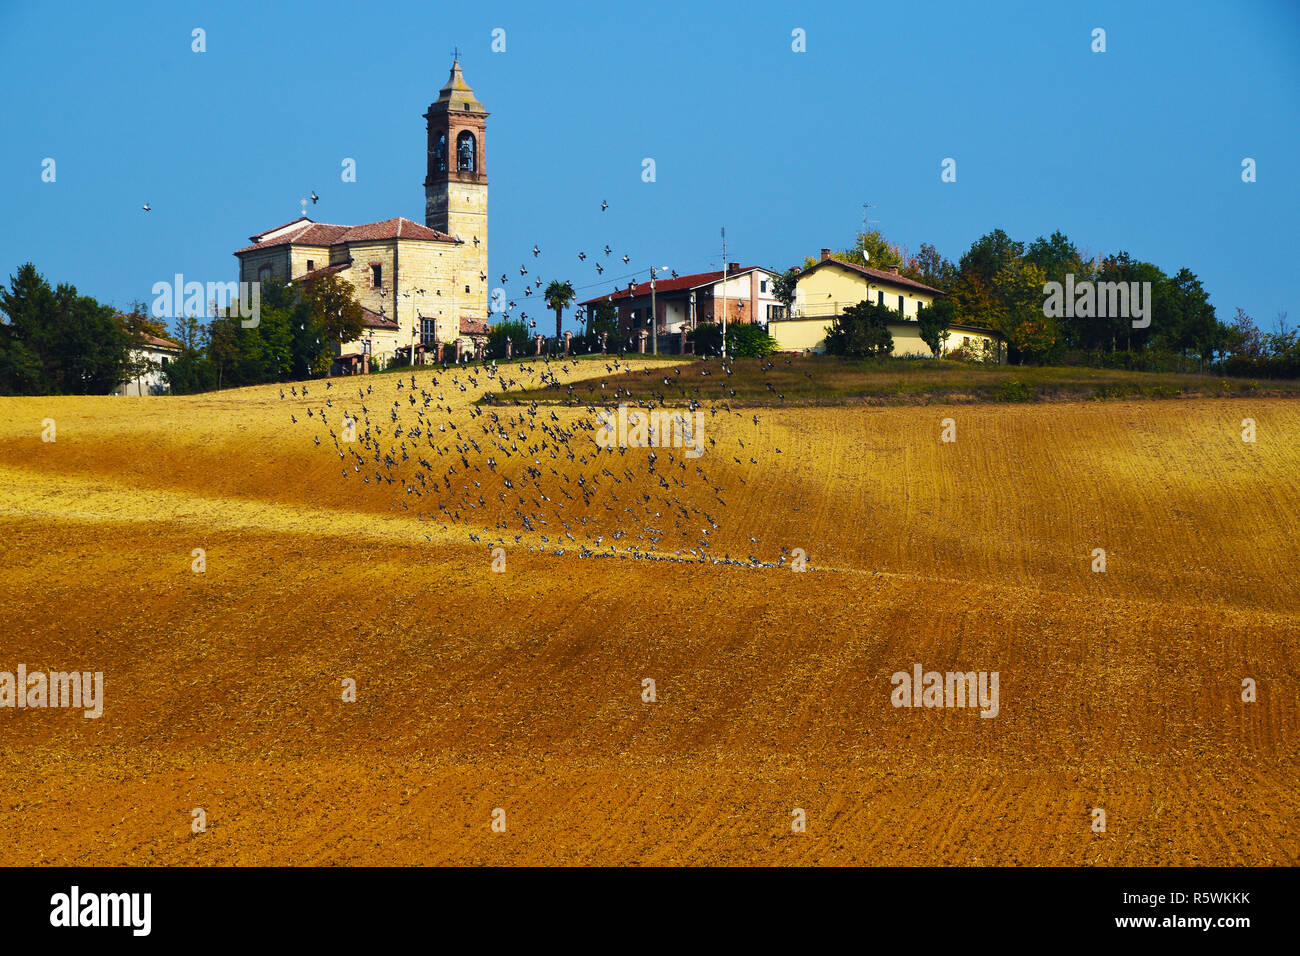 Flock of birds flying near Rural village landscape, Mombisaggio, Alessandria, Piedmont, Italy Stock Photo